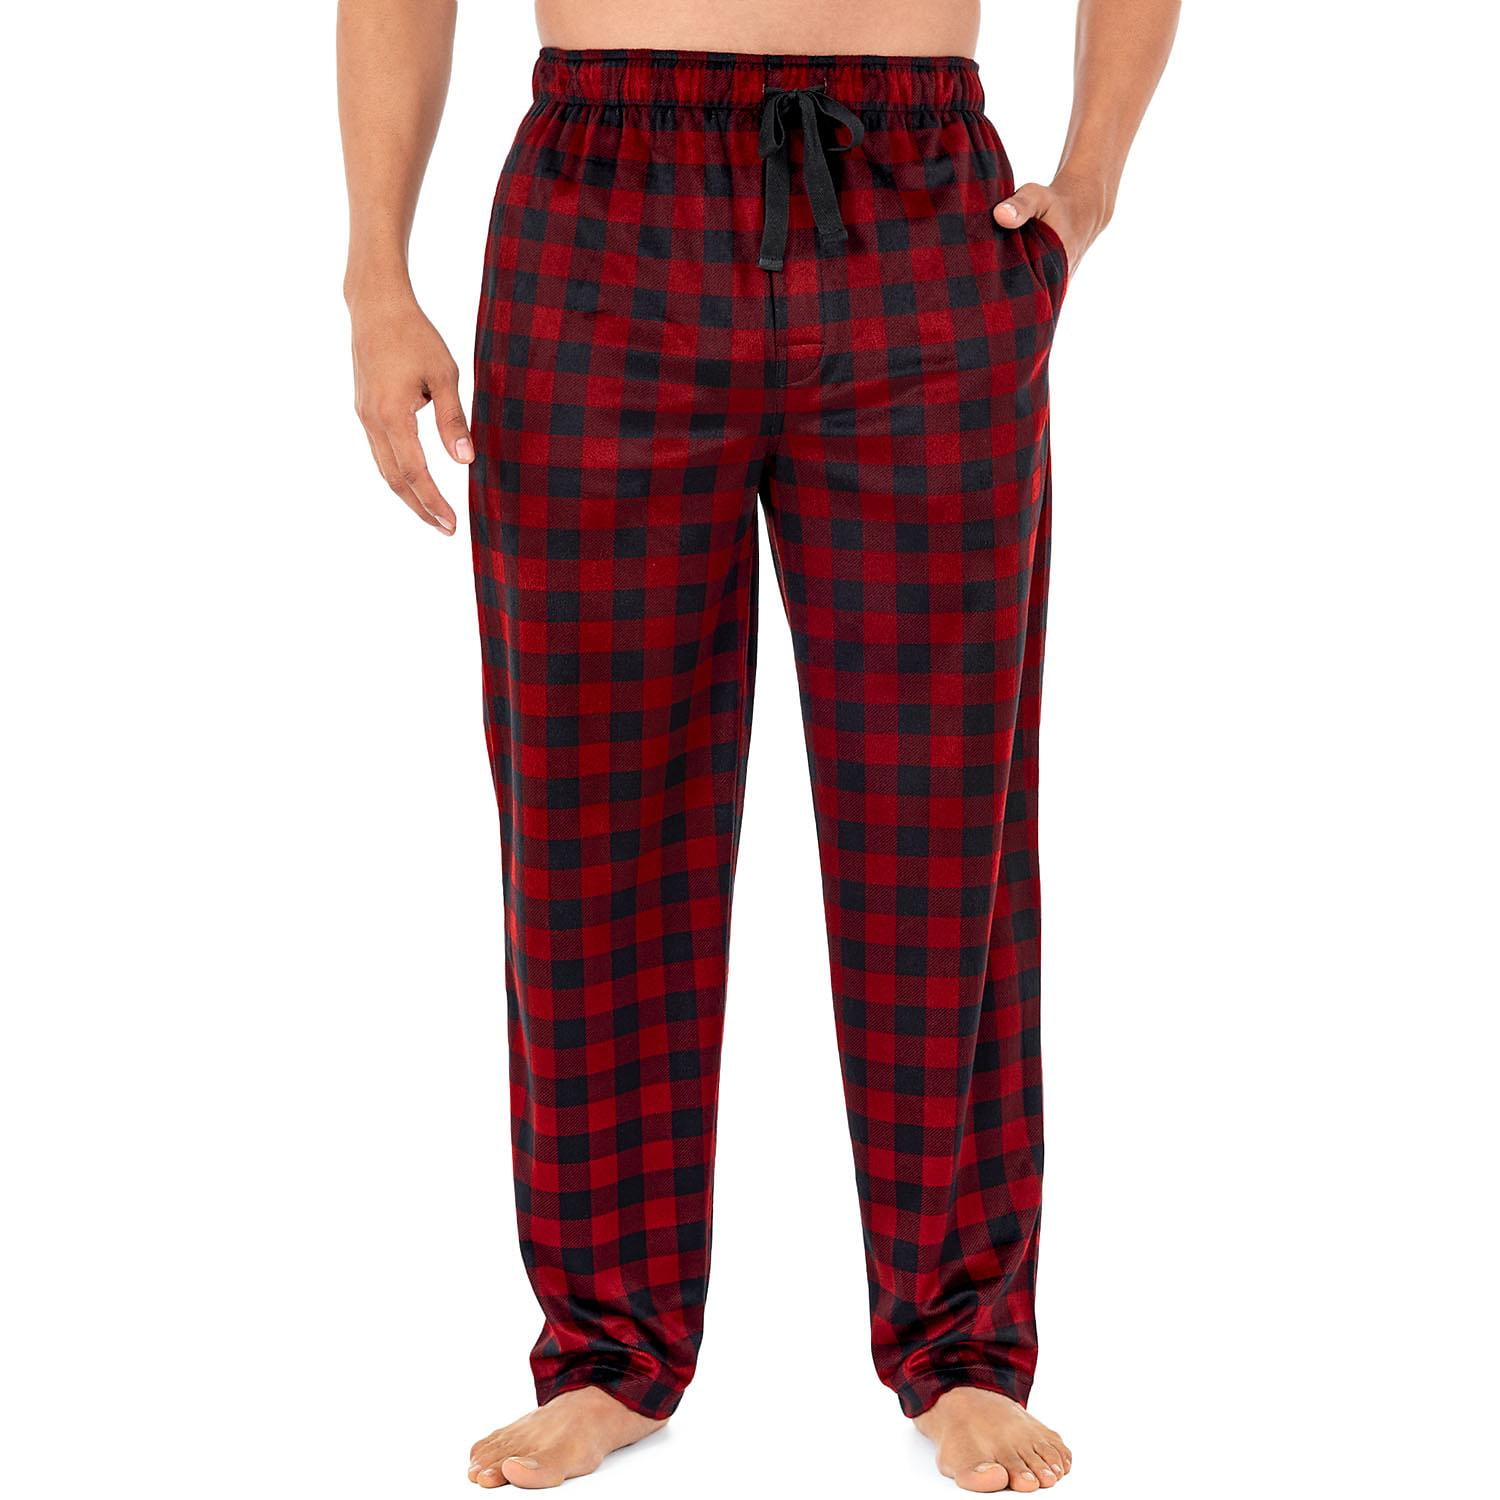 Izod Mens Microfleece Pant and Jersey Knit Long Sleeve Henley Top Set Pajama Bottom